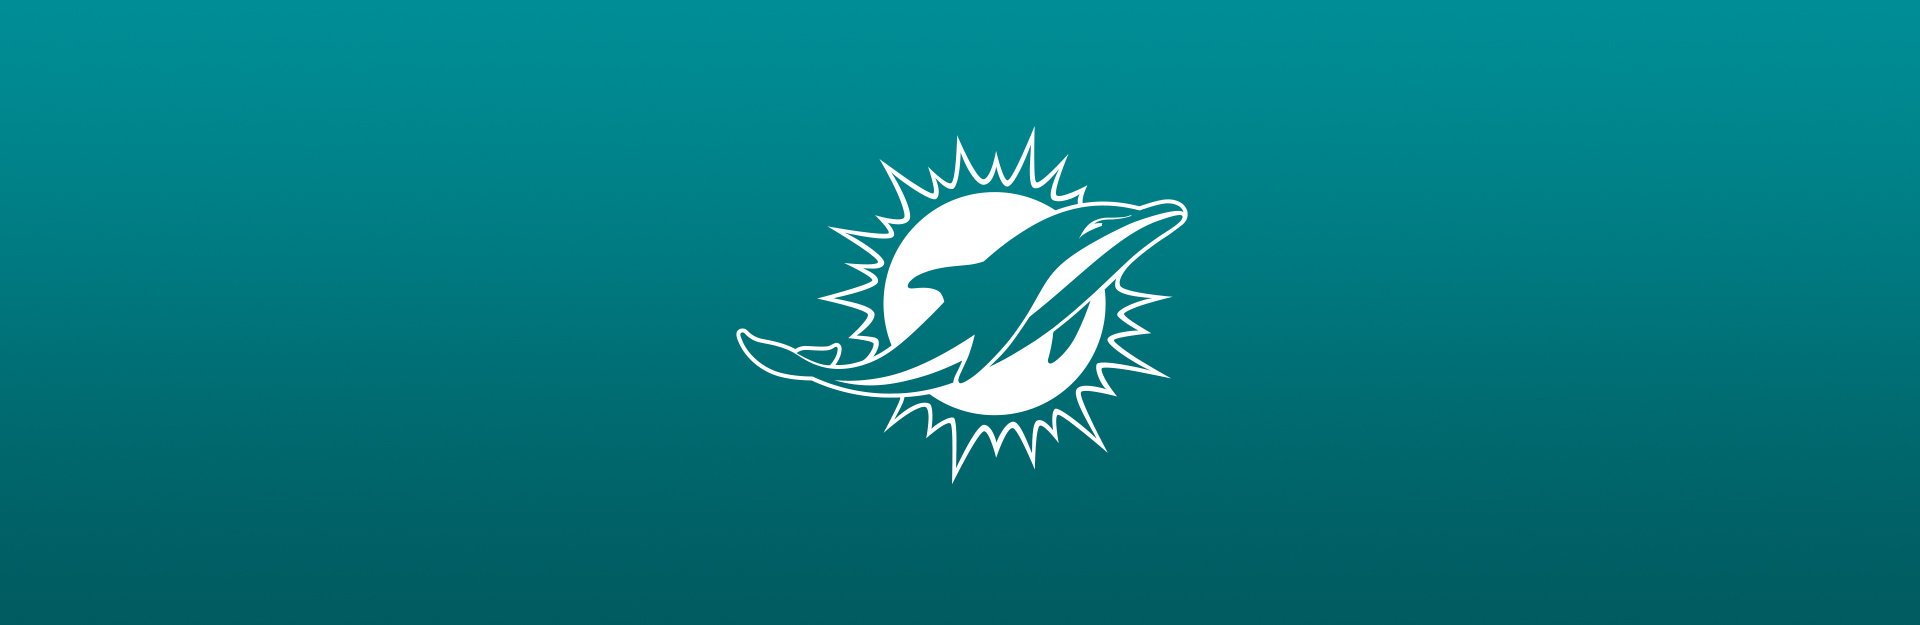 Miami Dolphins logo on blue background